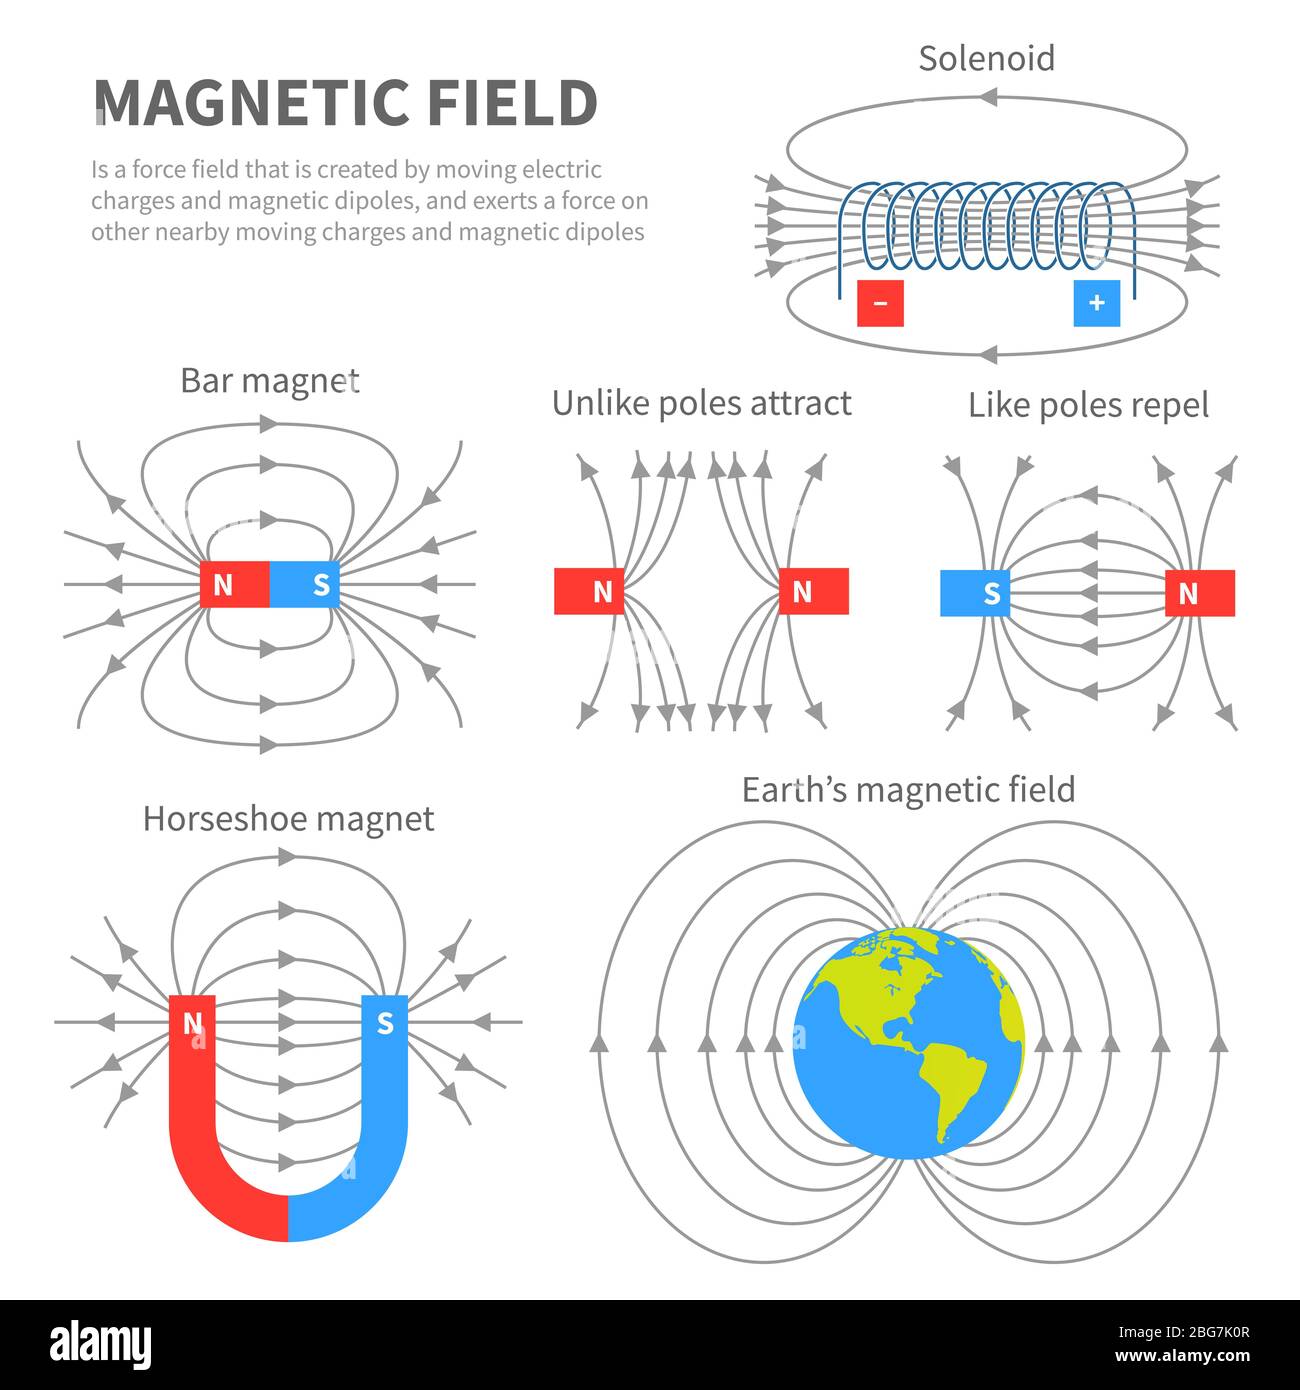 Elektromagnetisches Feld und magnetische Kraft. Polare Magnetschemata. Pädagogische Magnetismus Physik Vektor Poster. Magnetfeld Erde, Wissenschaft Physik edu Stock Vektor